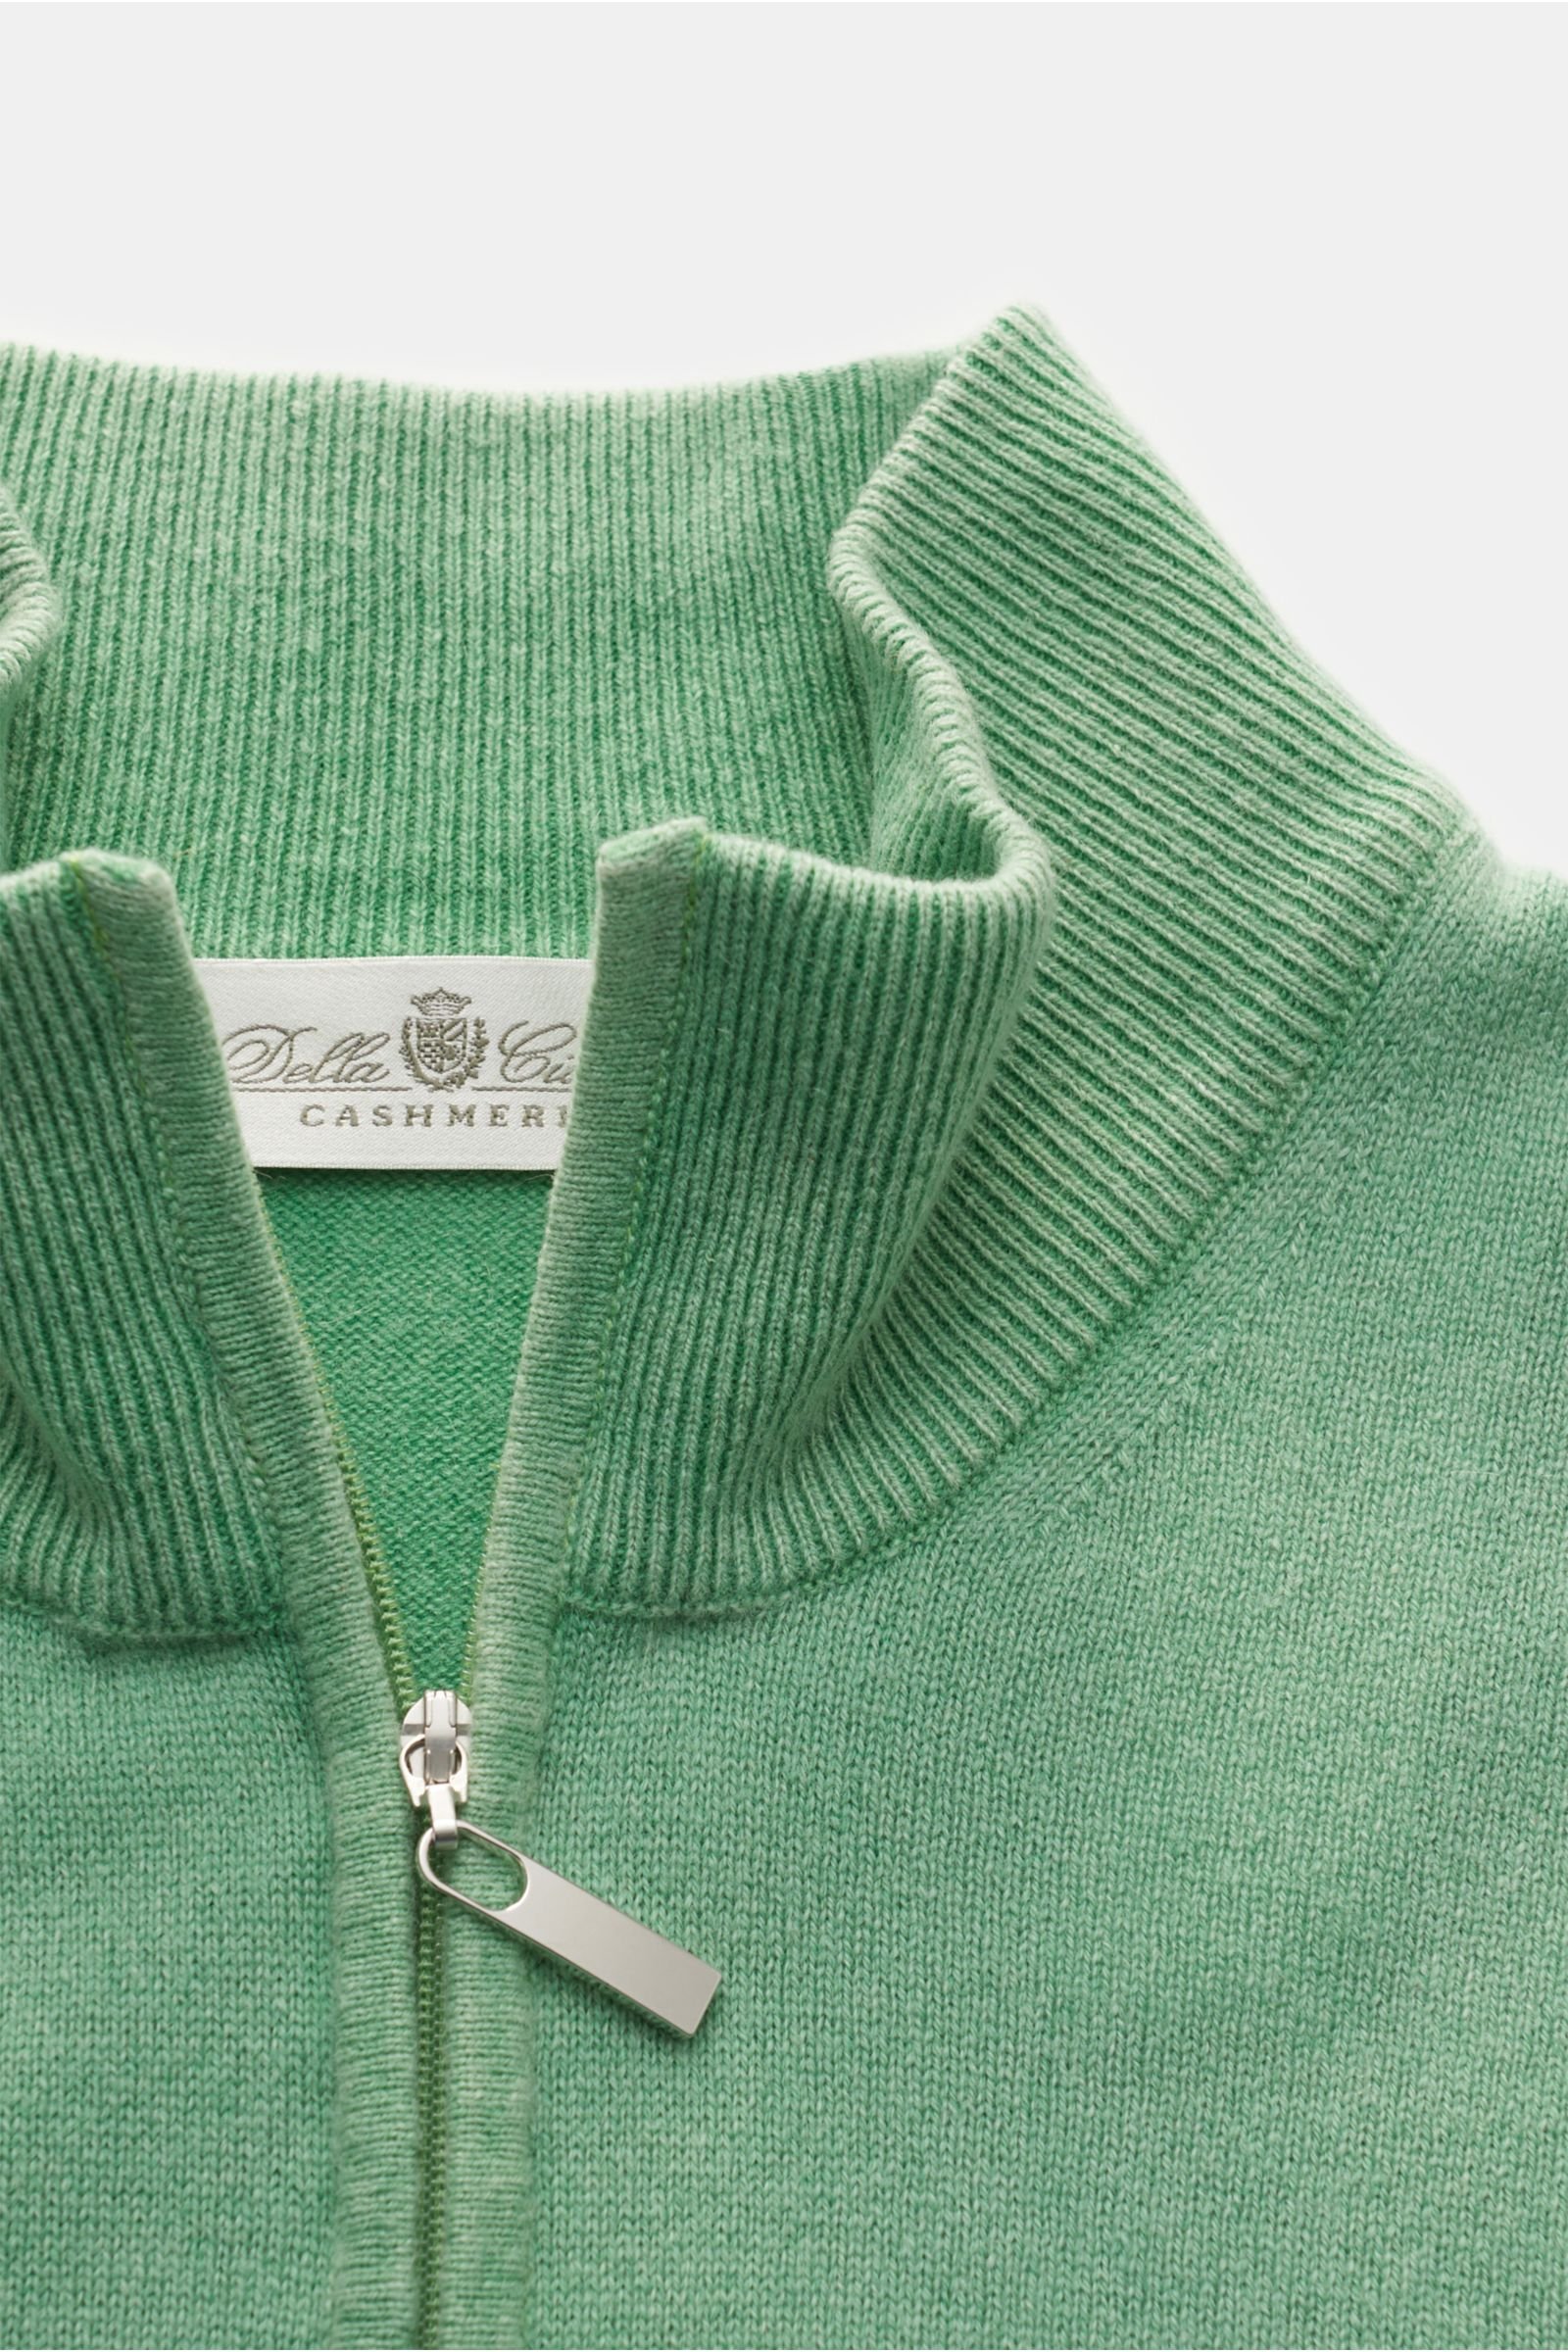 DELLA CIANA cashmere half-zip jumper light green | BRAUN Hamburg